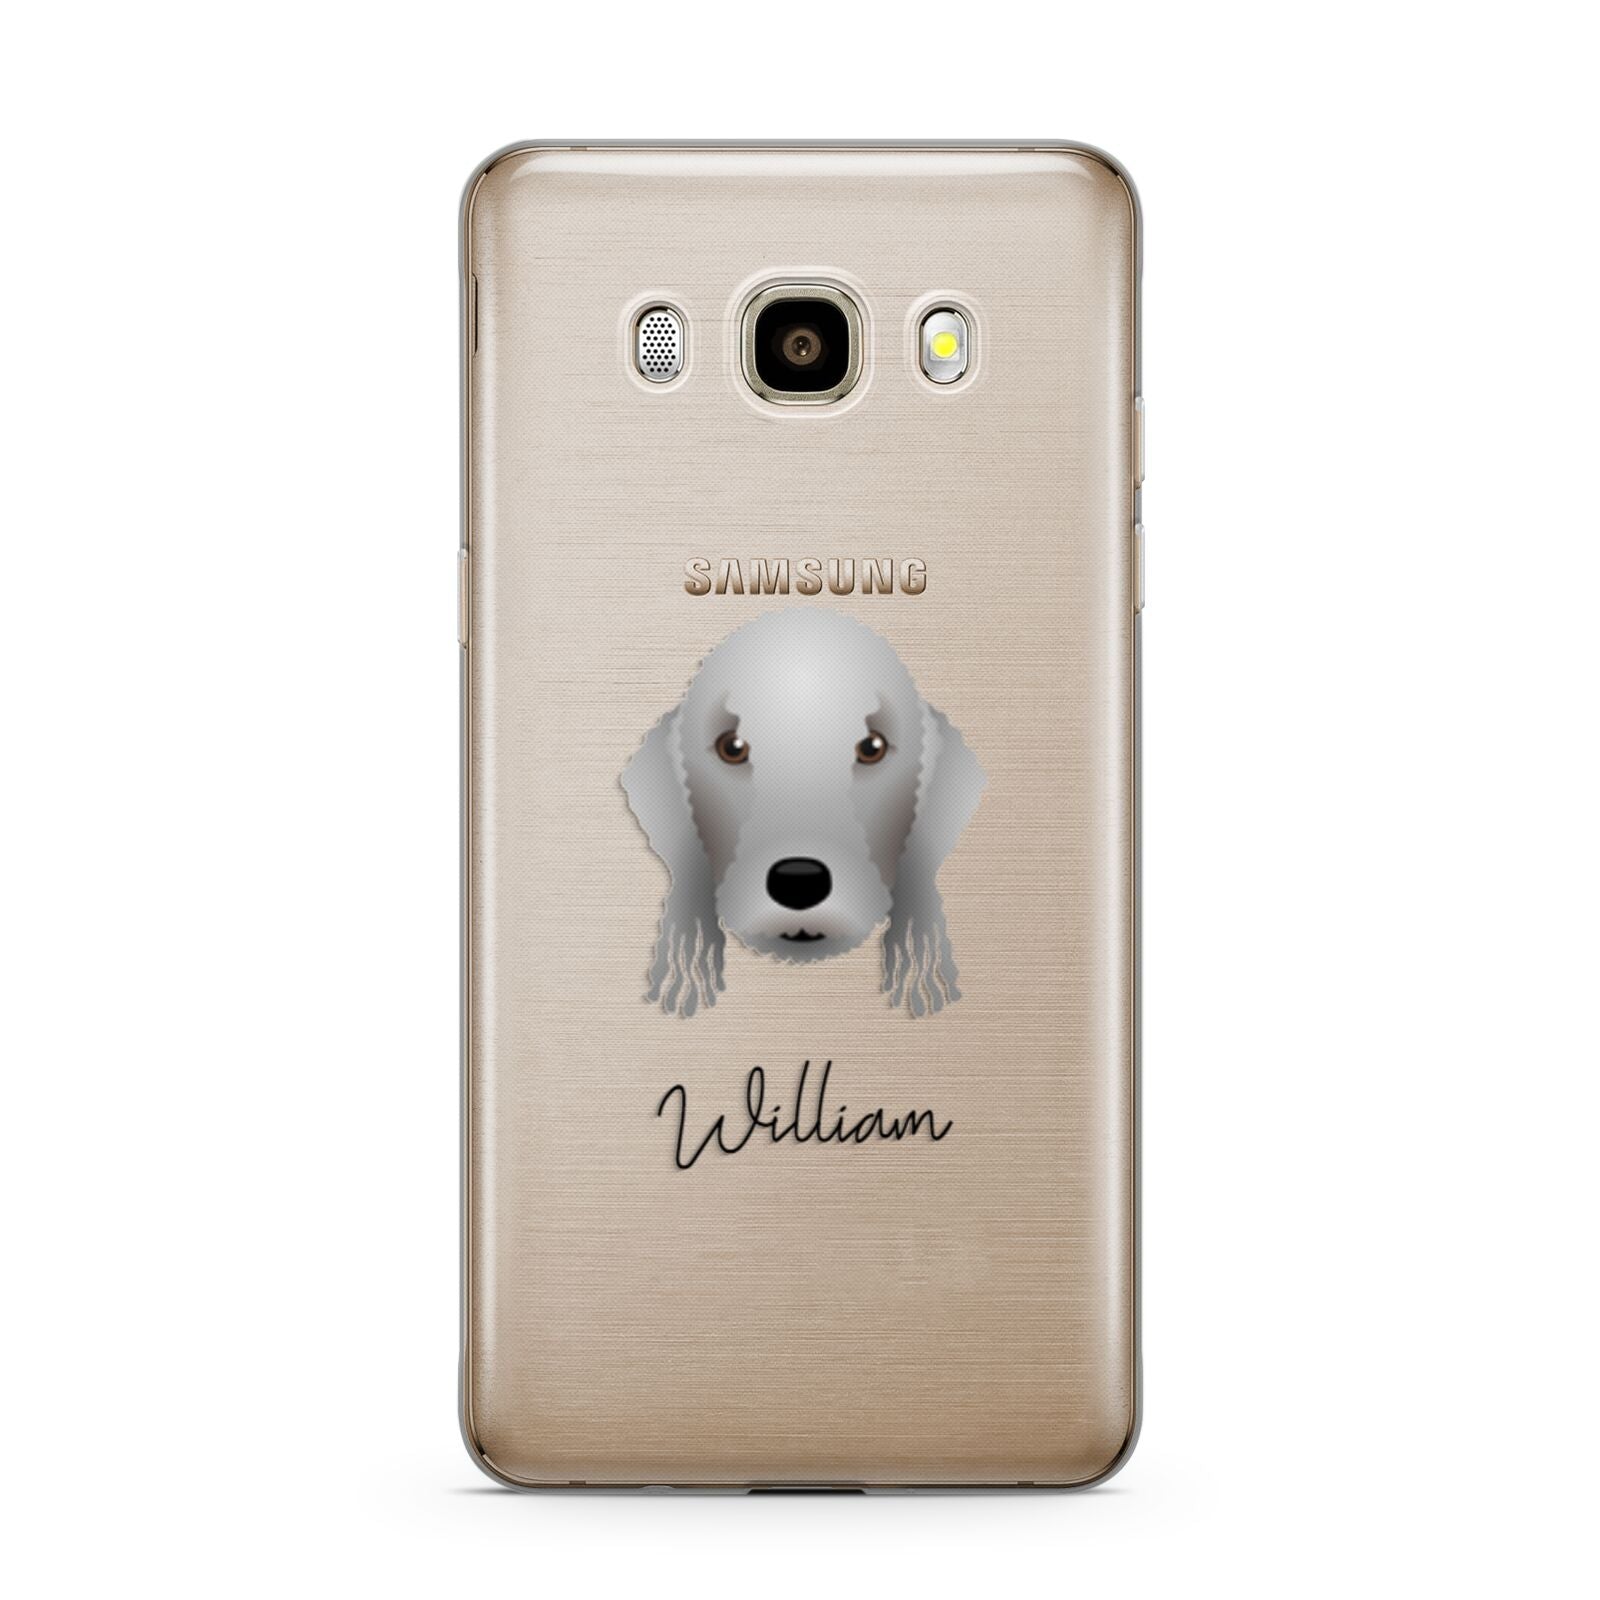 Bedlington Terrier Personalised Samsung Galaxy J7 2016 Case on gold phone